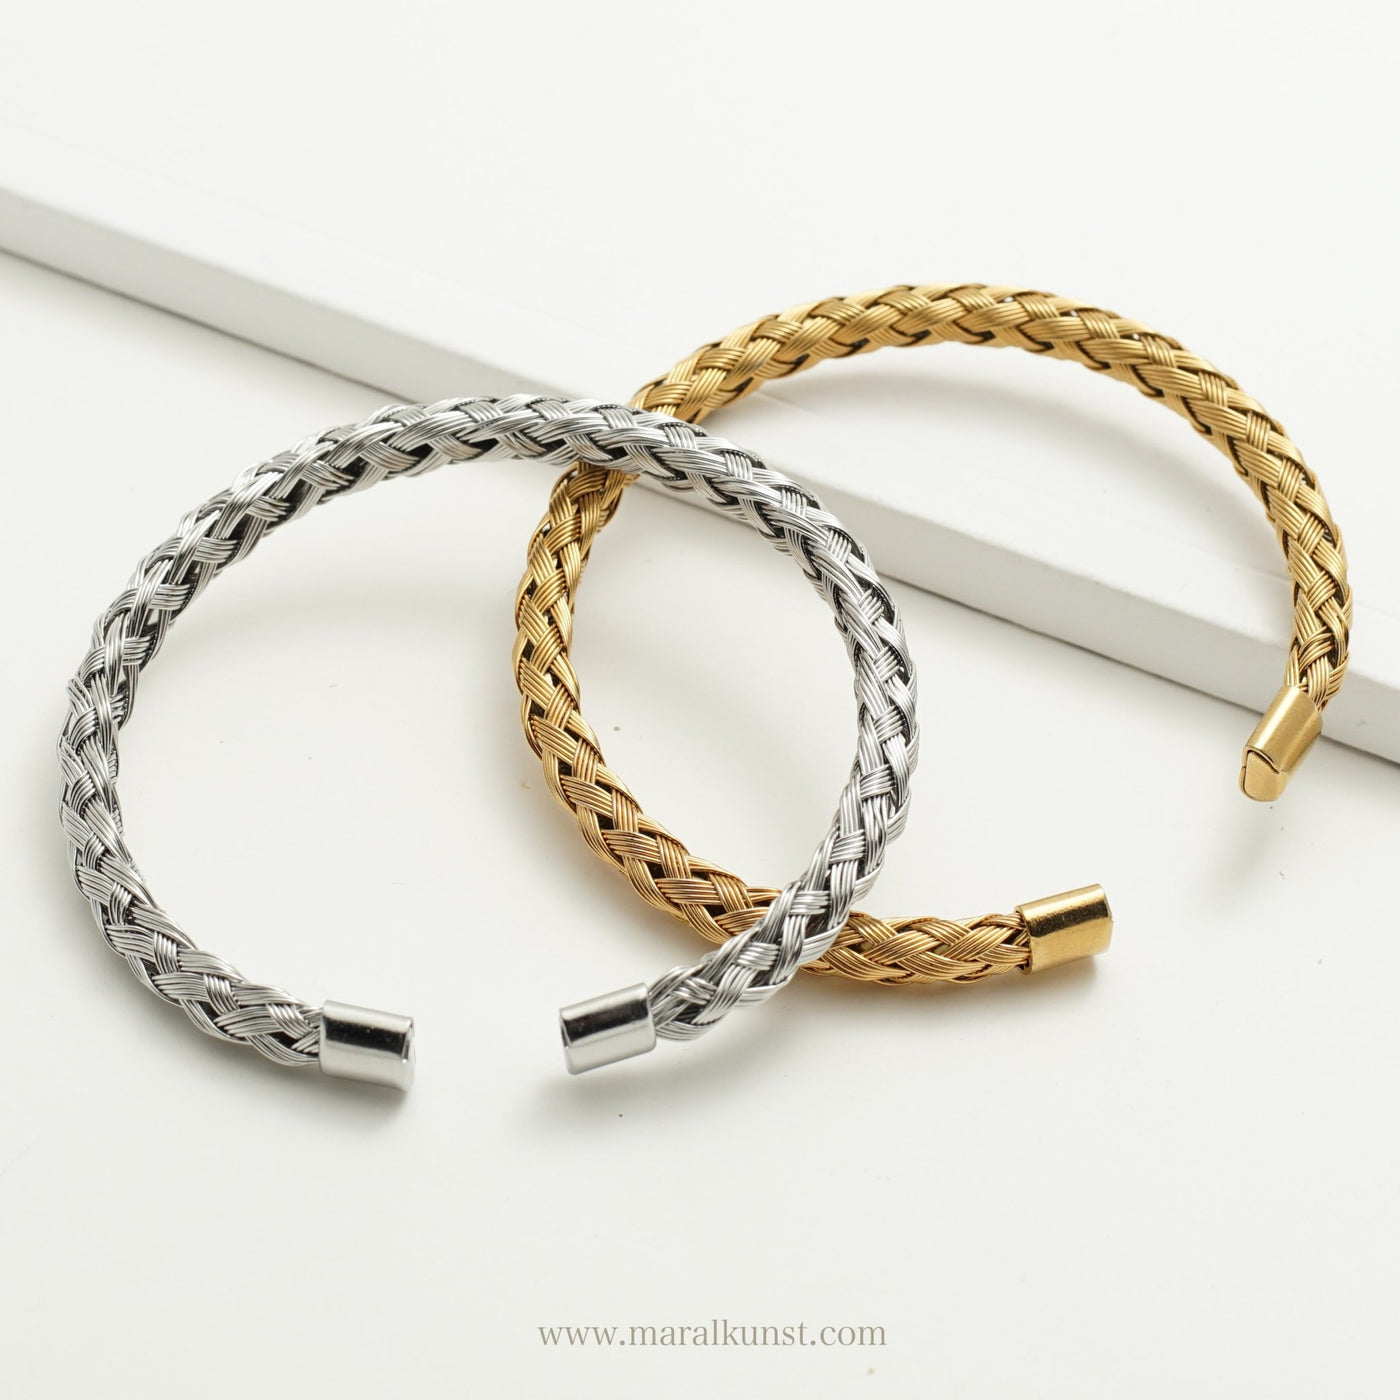 Legend Gold Cuff Bracelet - Maral Kunst Jewelry